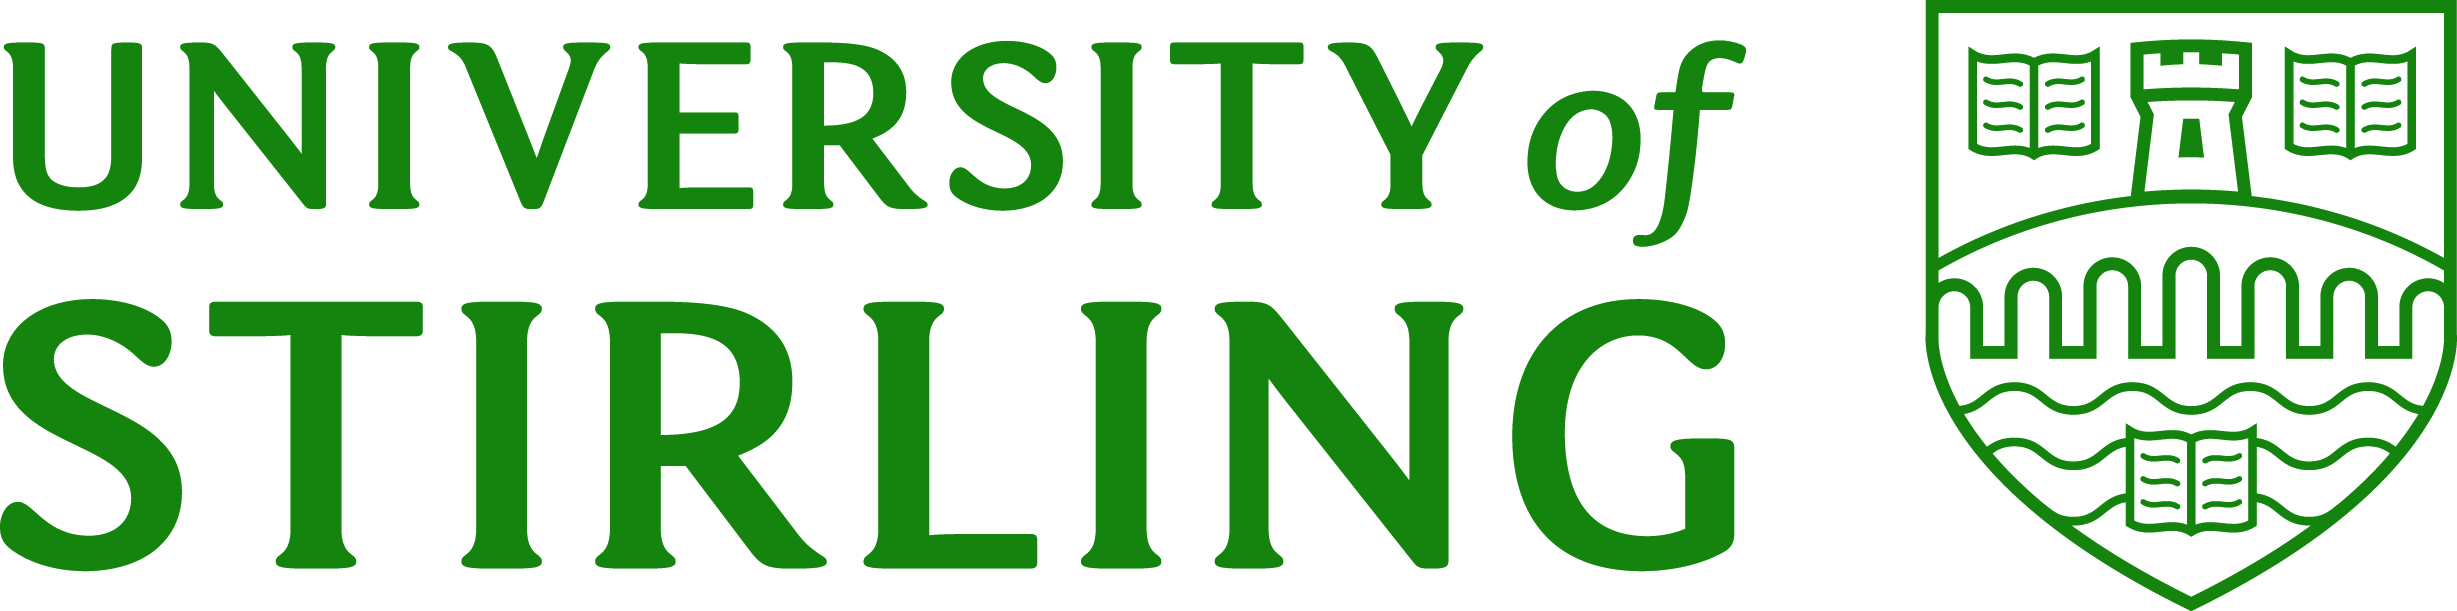 Stirling-logo